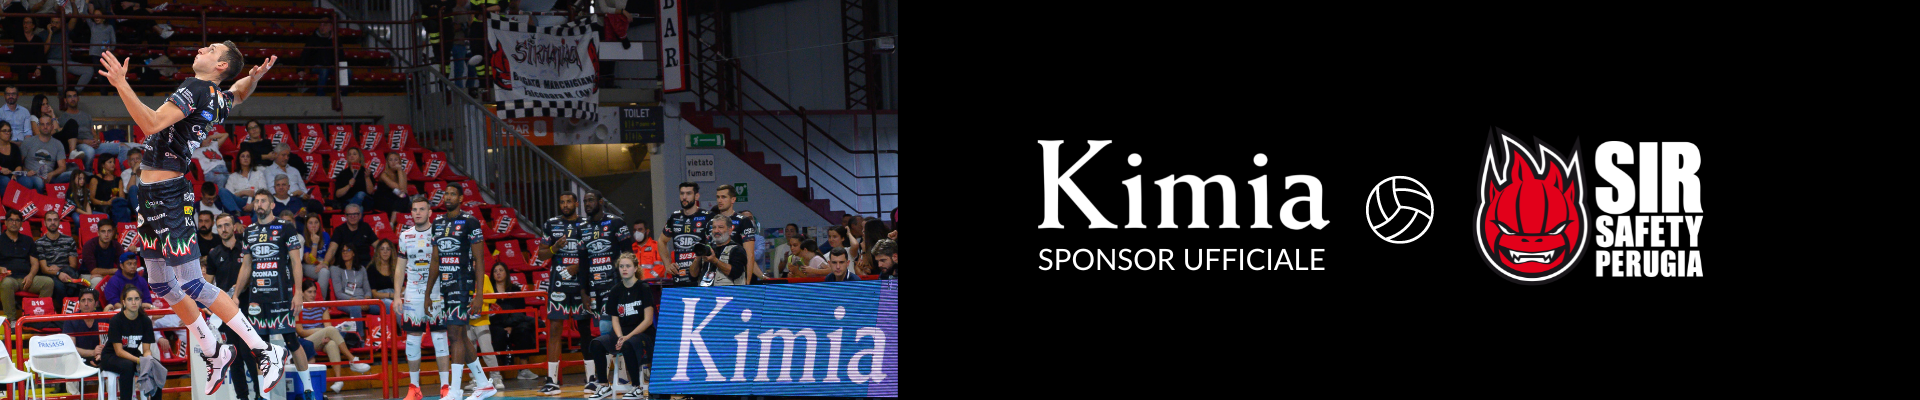 Kimia è sponsor ufficiale di Sir Safety Volley Perugia